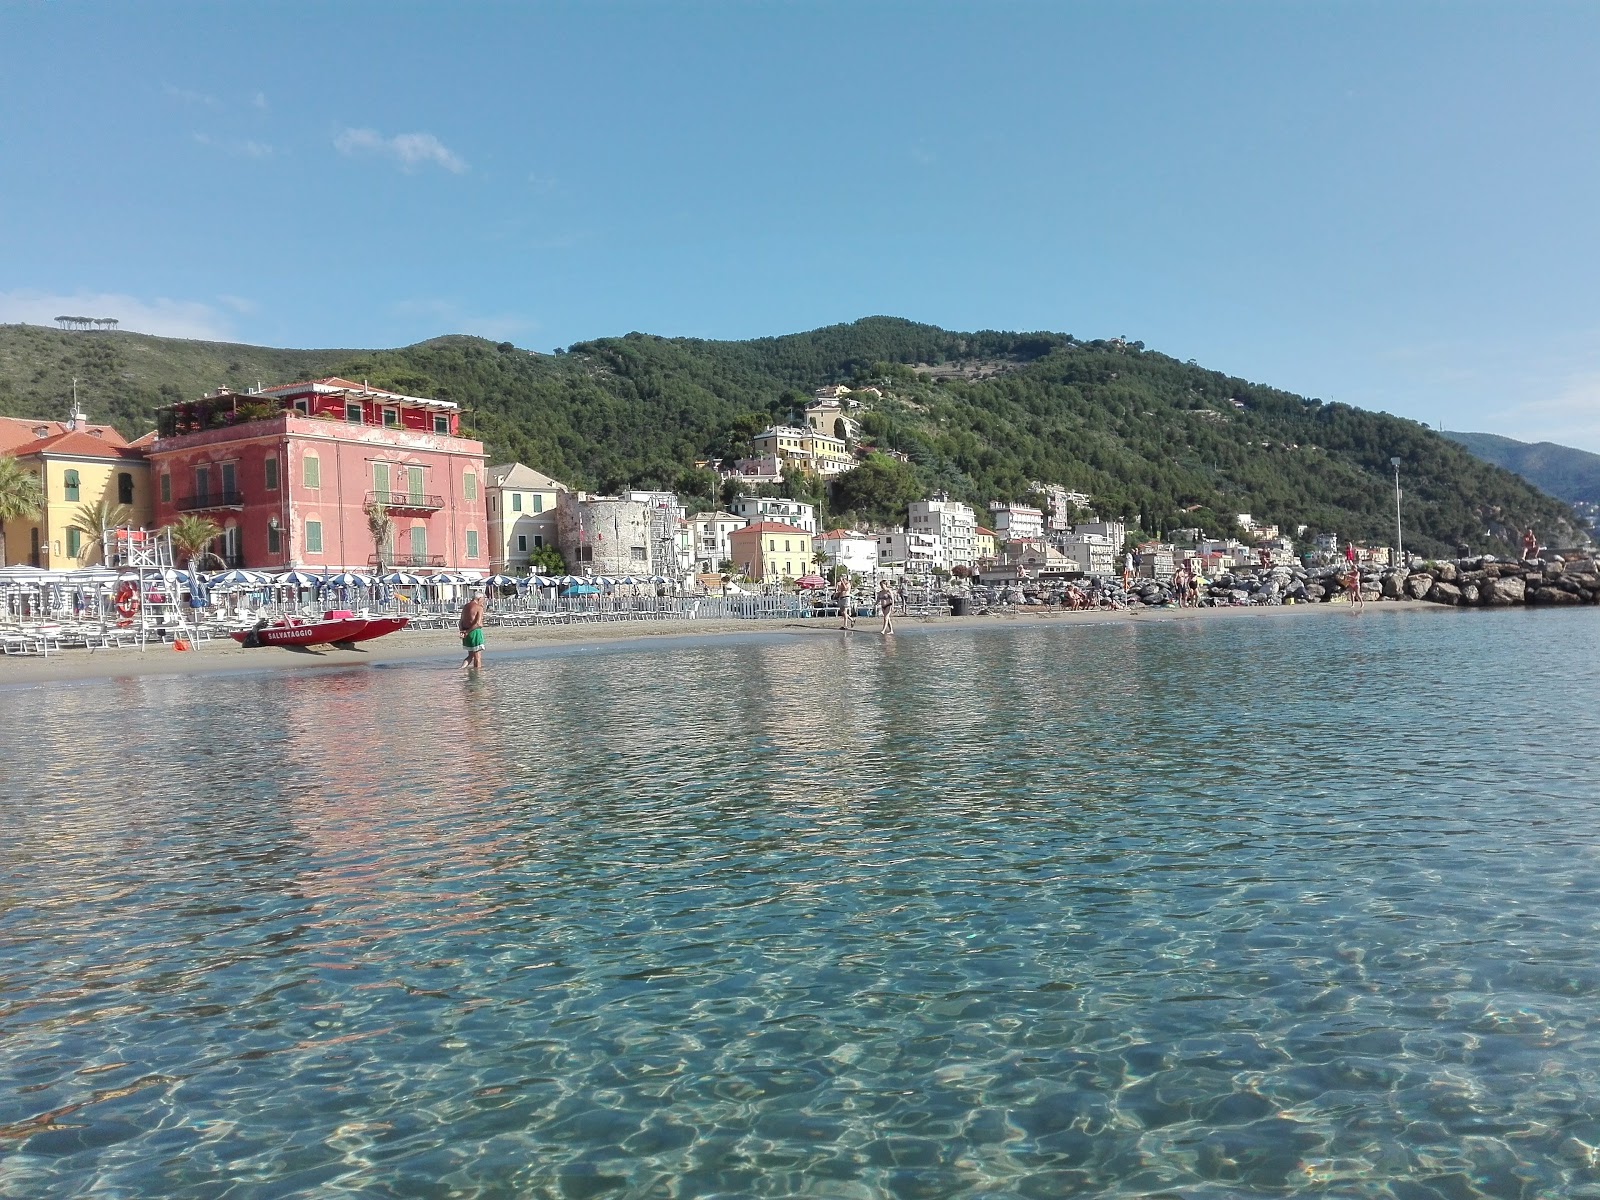 Fotografija Spiaggia di Laigueglia z modra voda površino